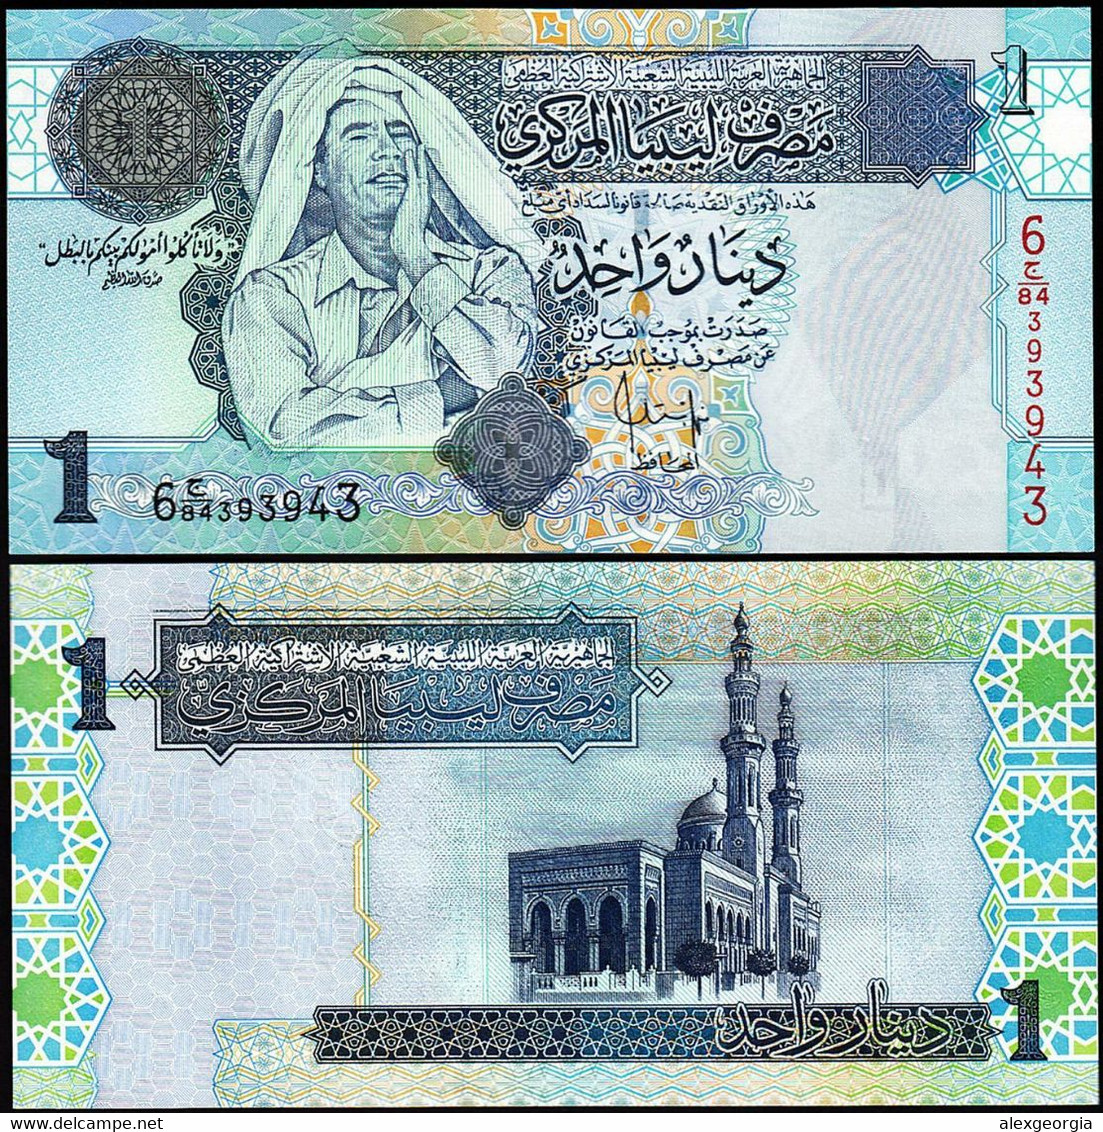 Libia 1 Dinar Nd.2004 UNC - Libye